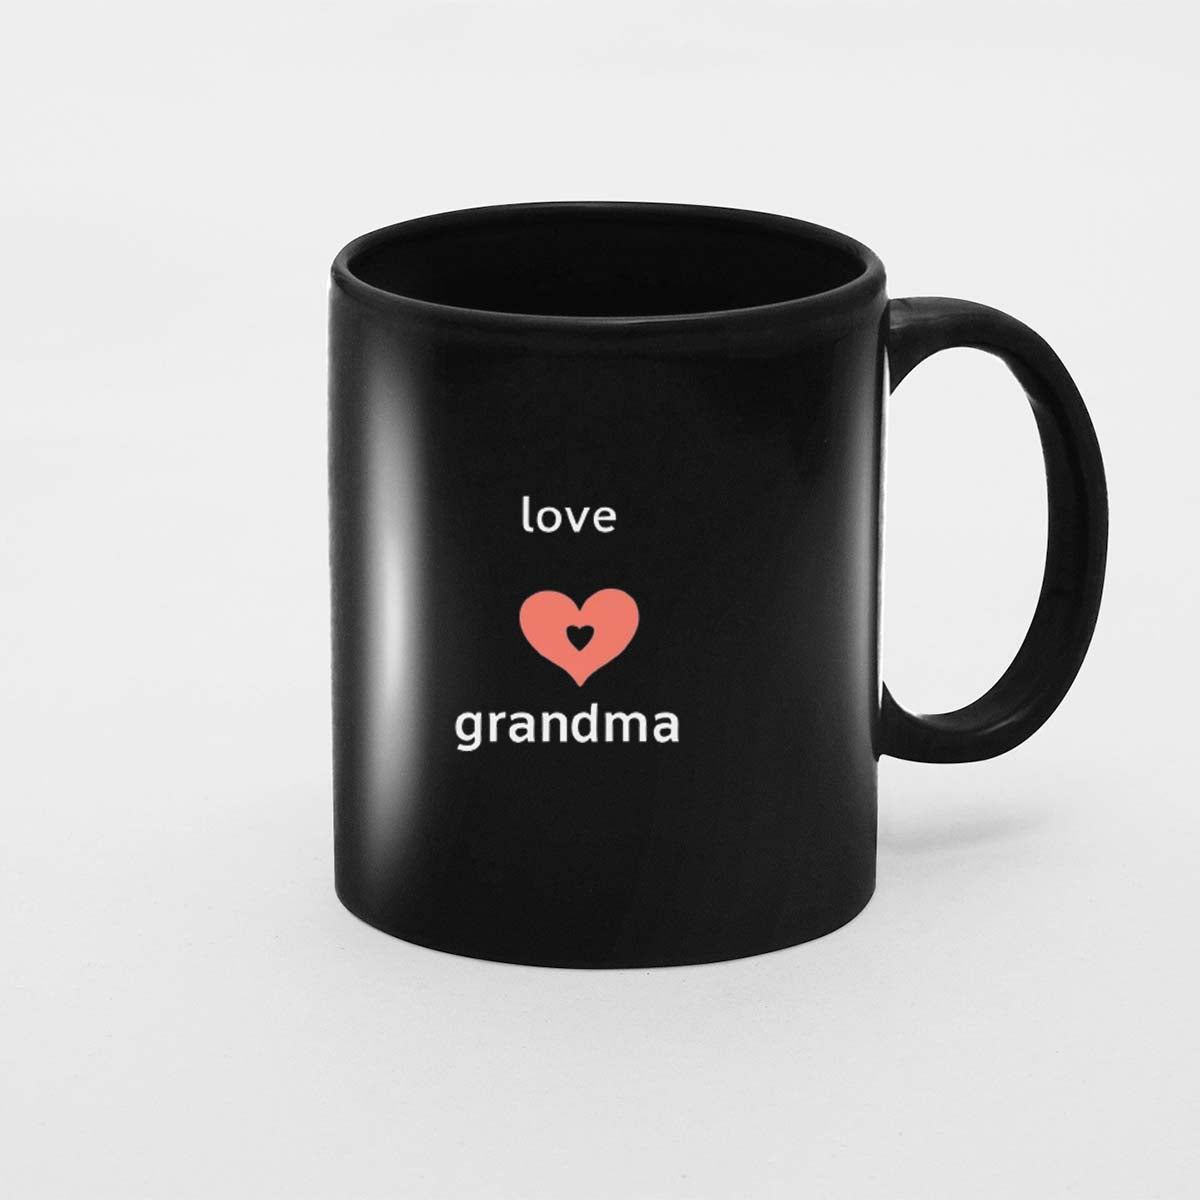 Grandma Mug, Grandma Gift For Grandma Birthday Gift Personalized Grandma Coffee Cup, Mothers Day Gift From Granddaughter Grandson, Love Grandma 2